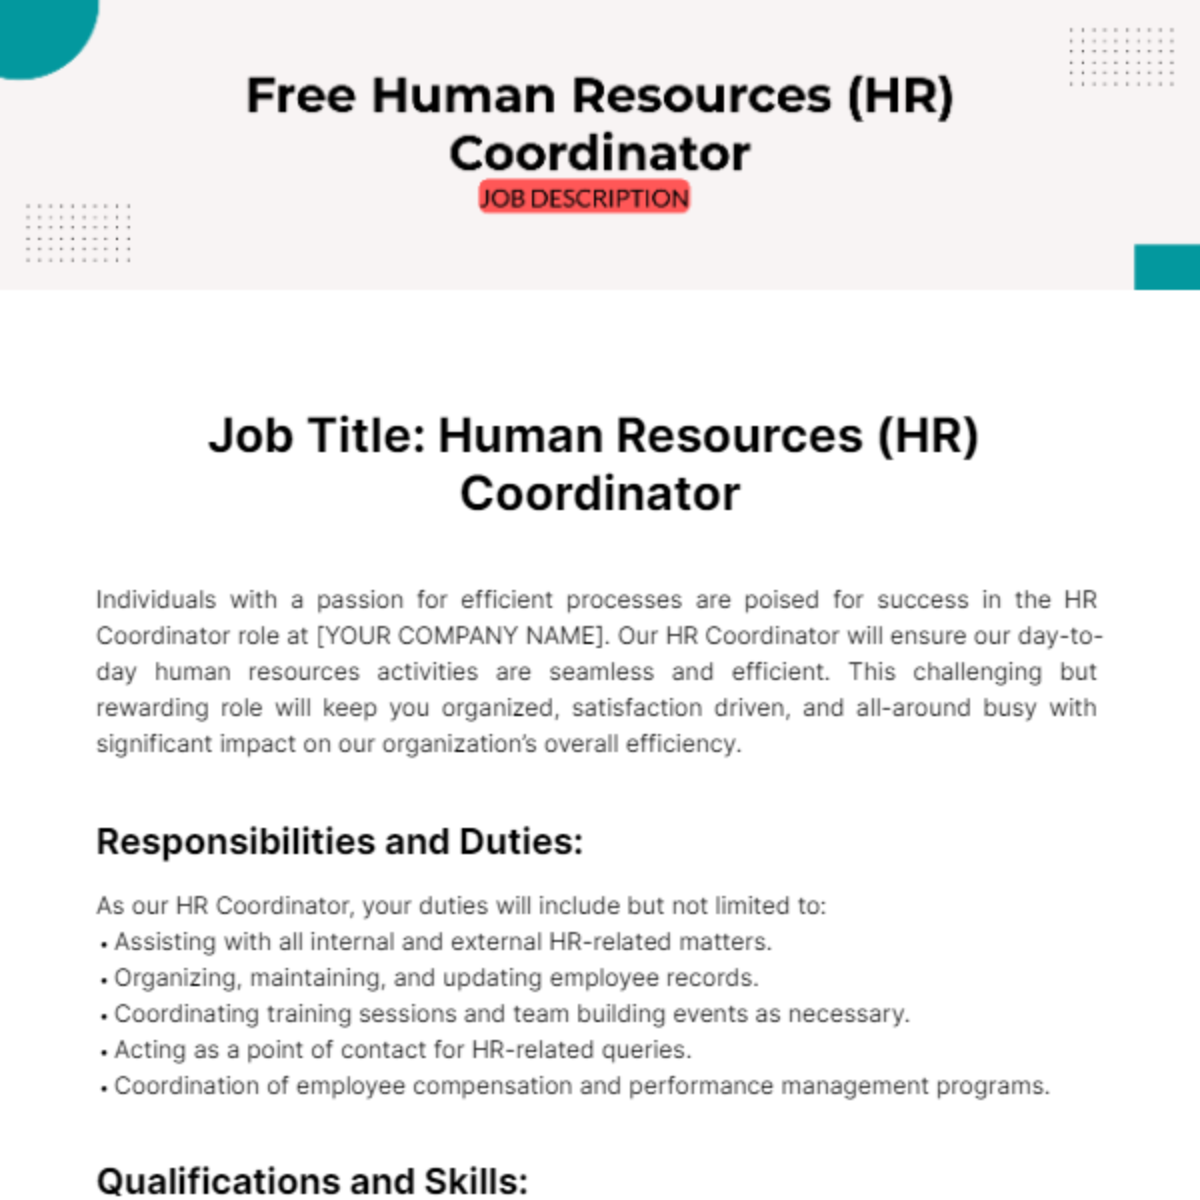 Human Resources (HR) Coordinator Job Description Template